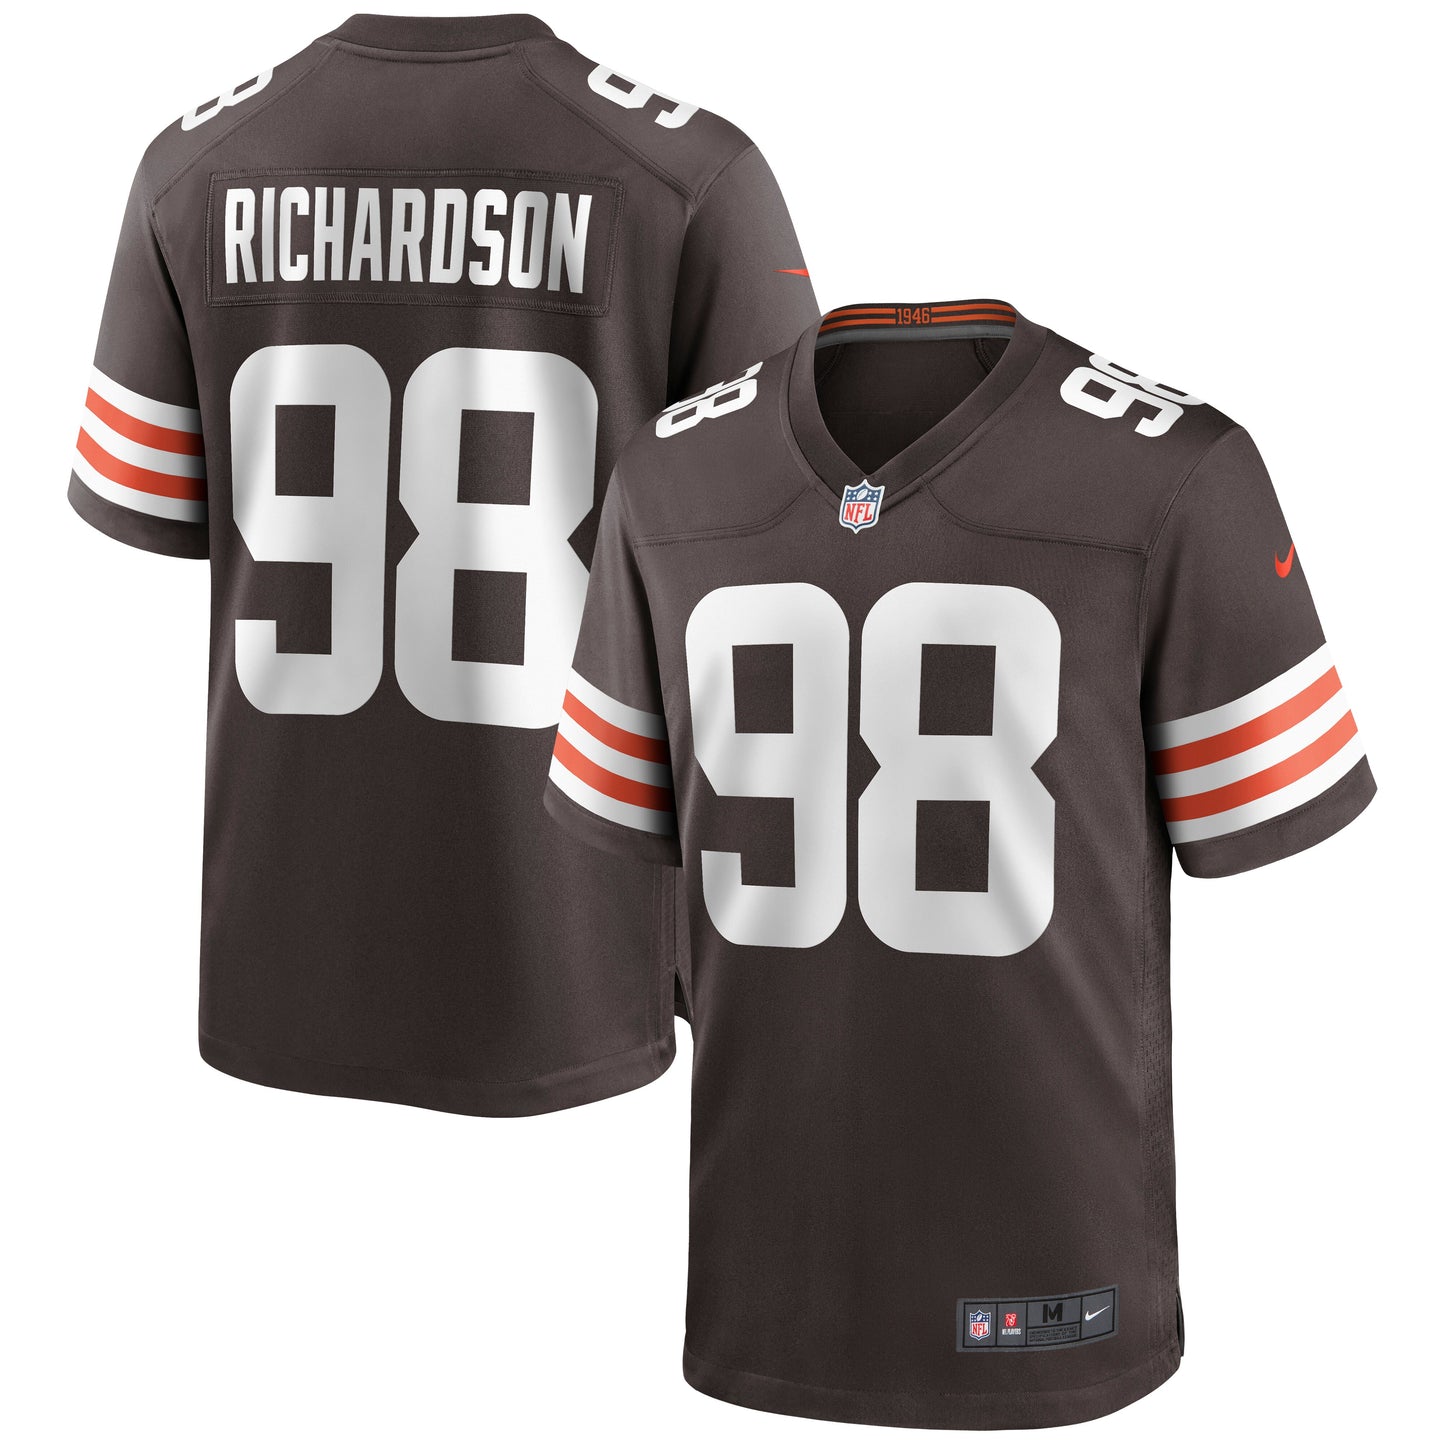 Sheldon Richardson Cleveland Browns Nike Game Jersey - Brown